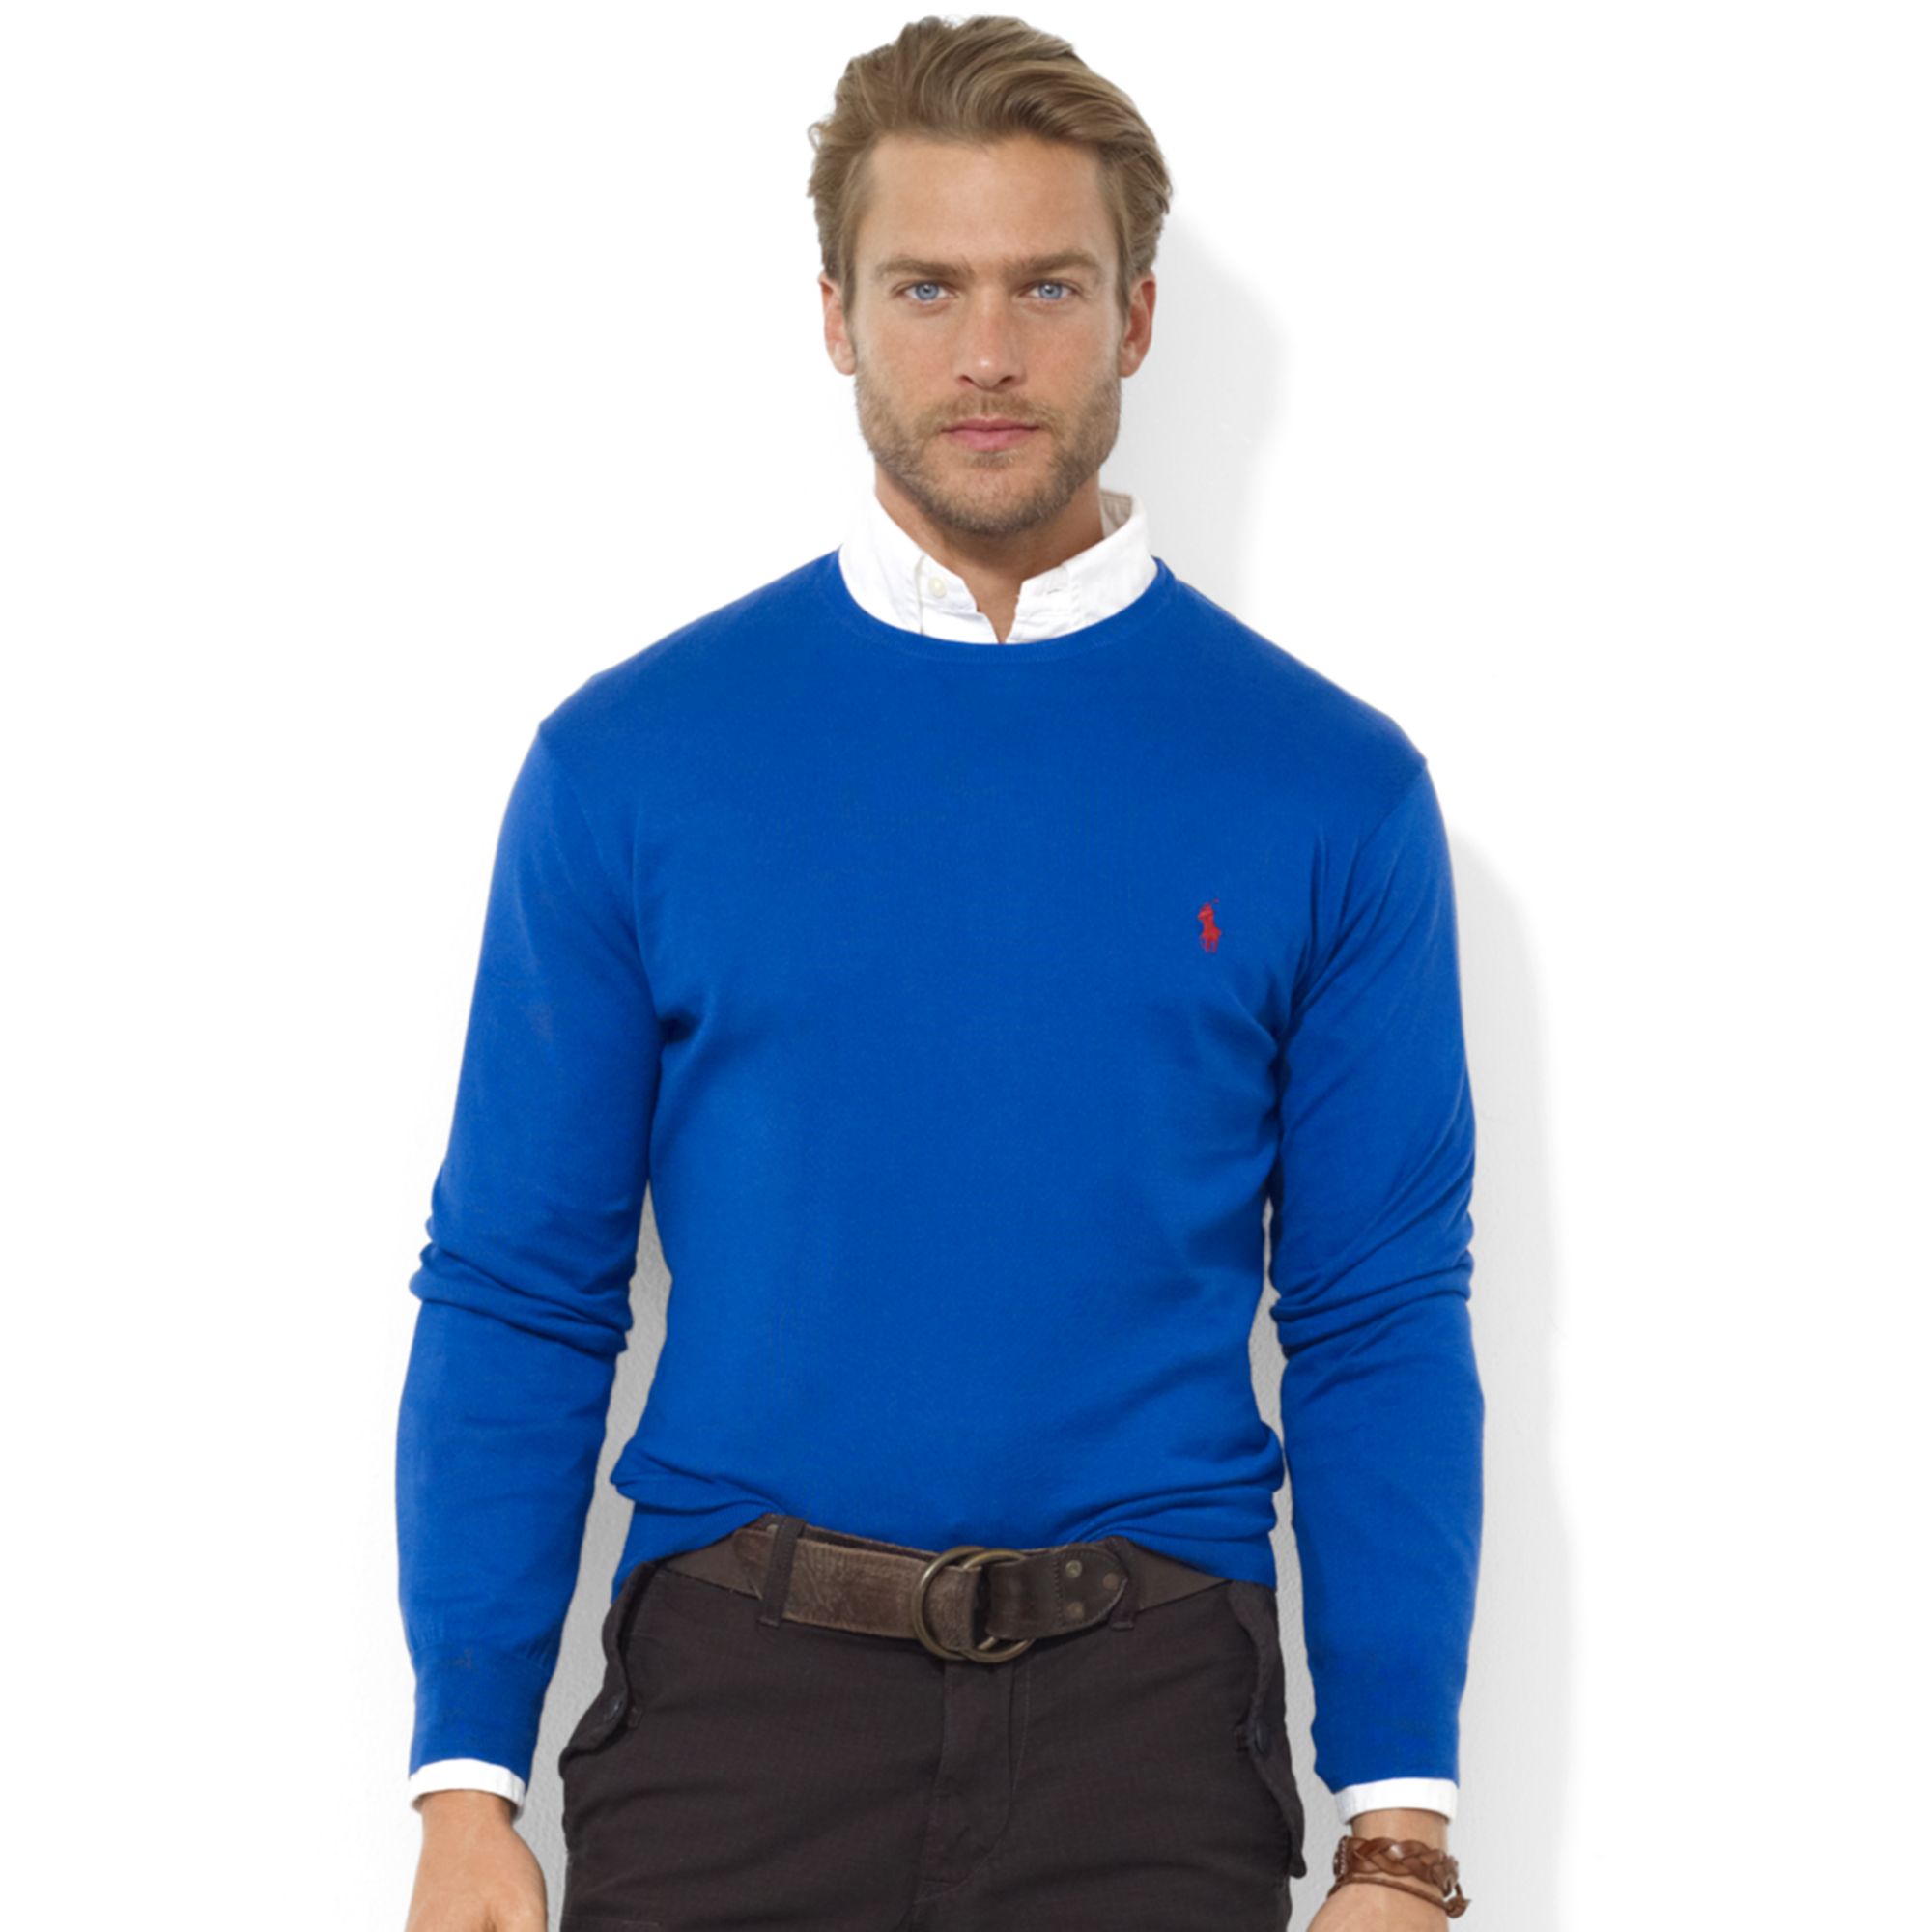 Ralph Lauren Crew Neck Pima Cotton Sweater in Blue for Men - Lyst